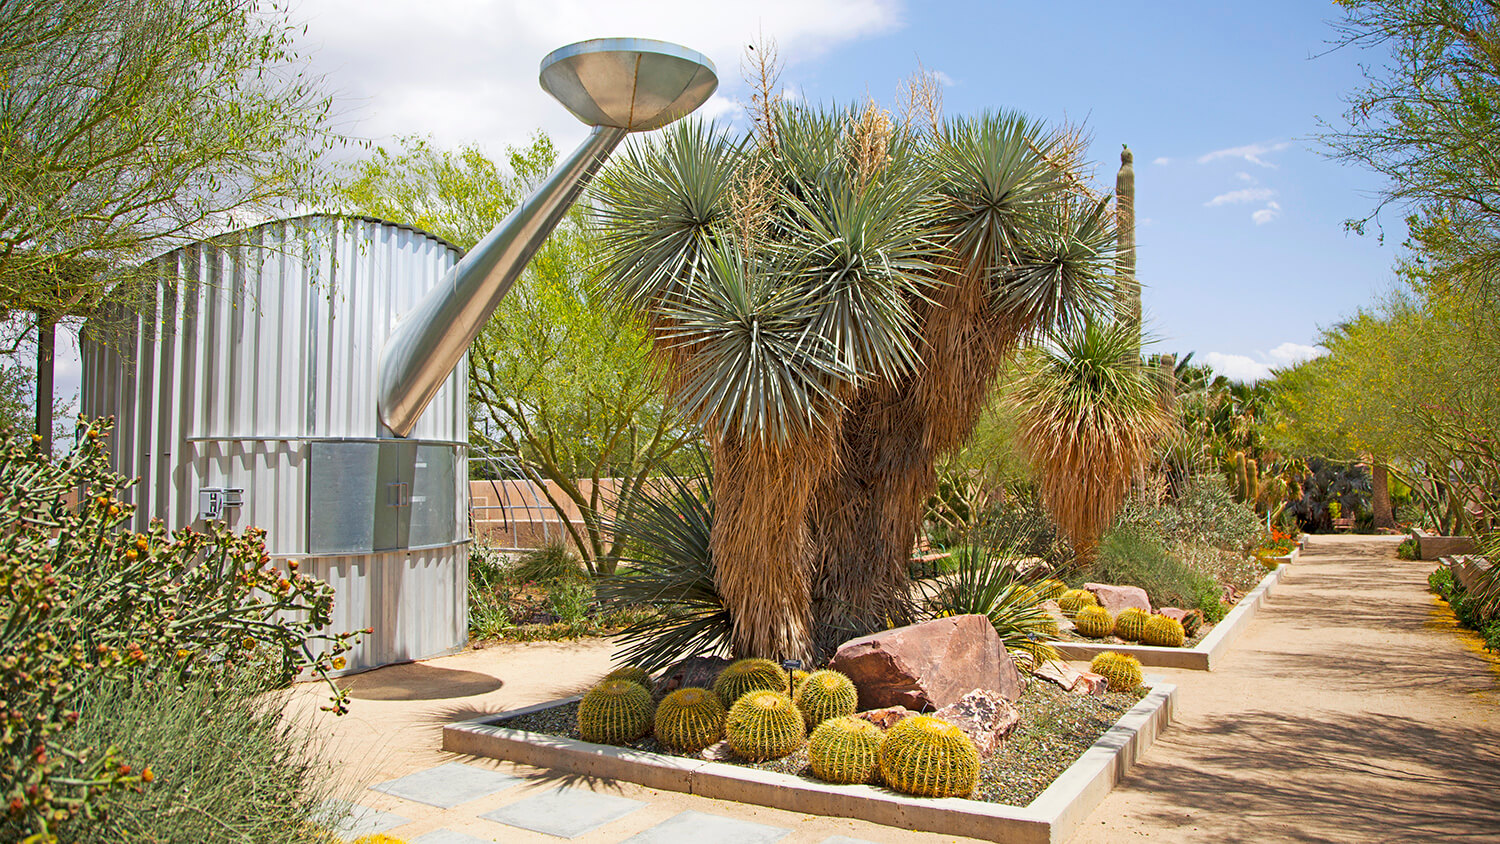 Springs Preserve  Botanical Garden & Butterfly Habitat in Las Vegas